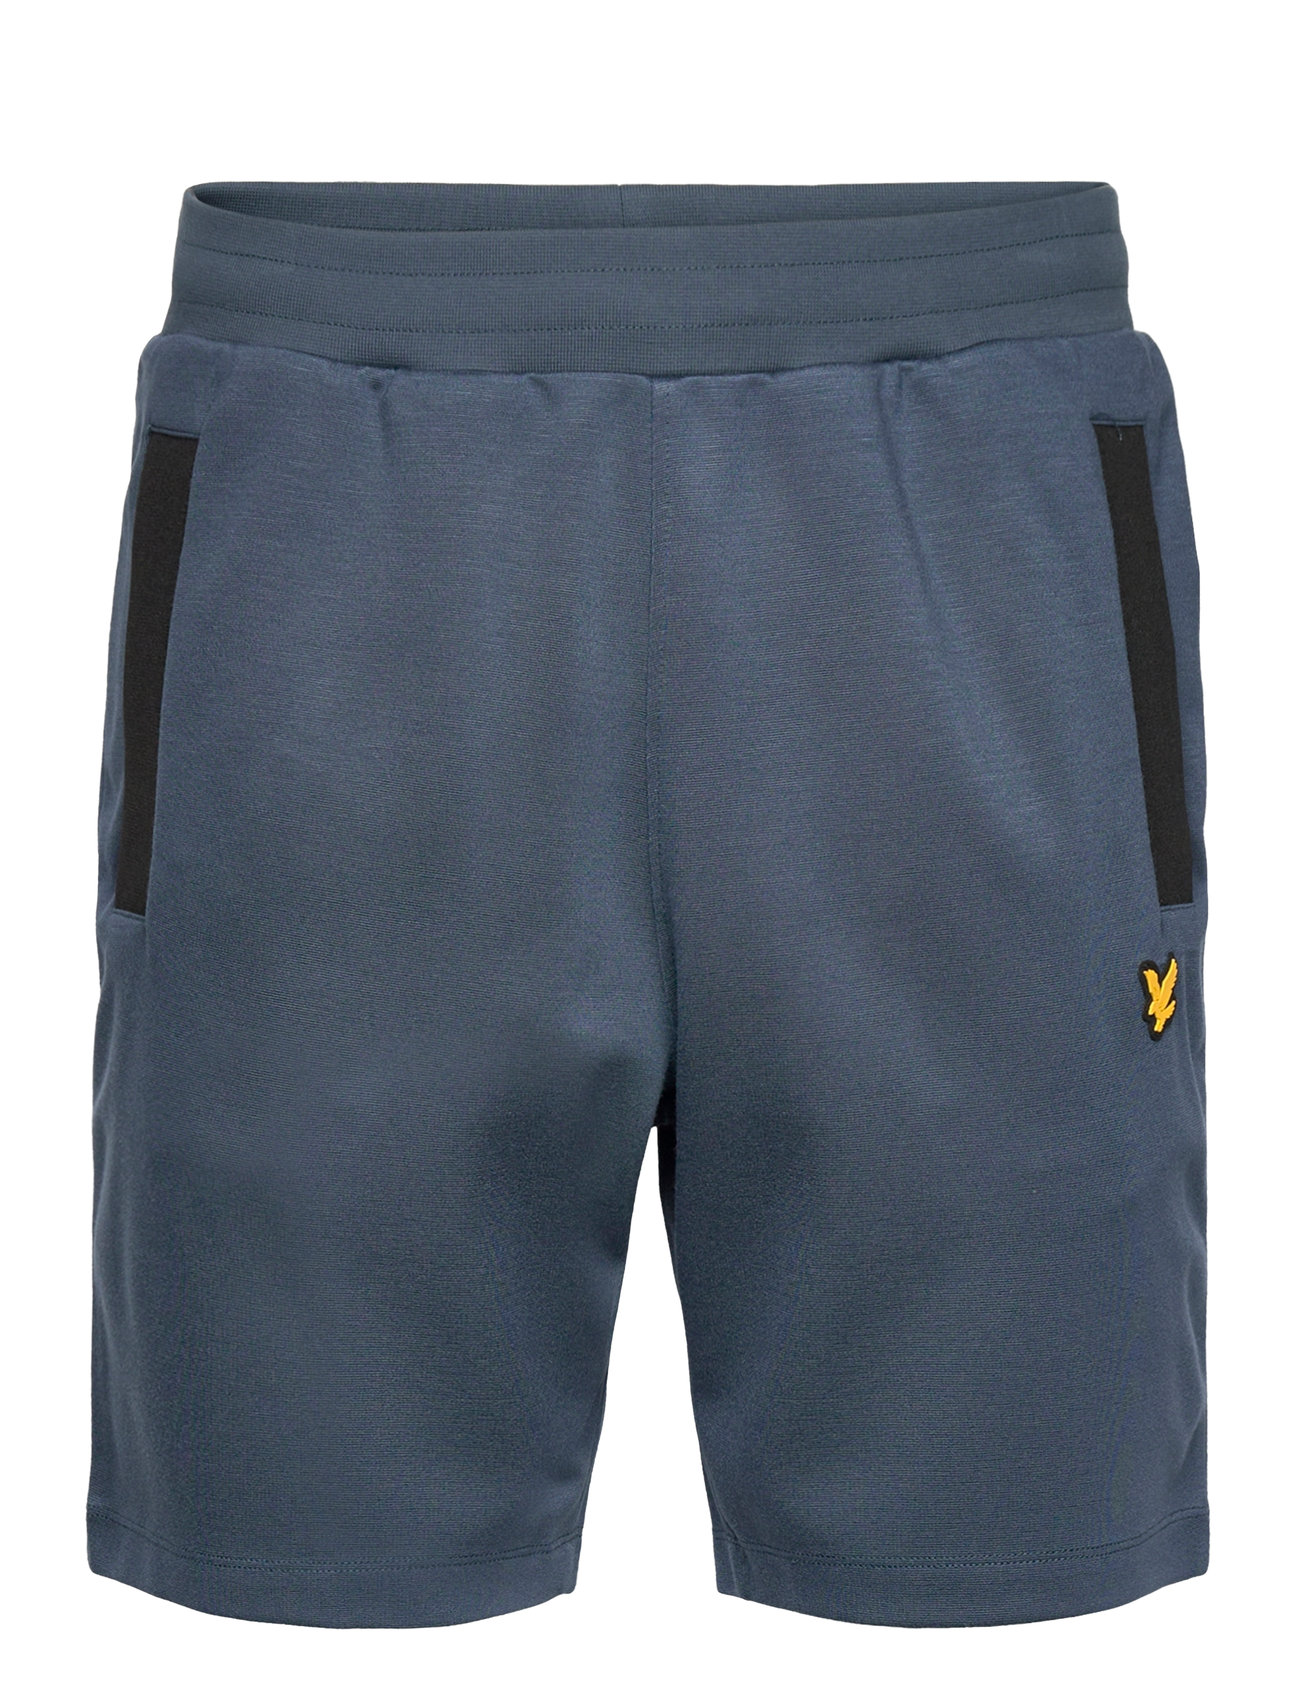 Pocket Branded Shorts Sport Shorts Casual Navy Lyle & Scott Sport